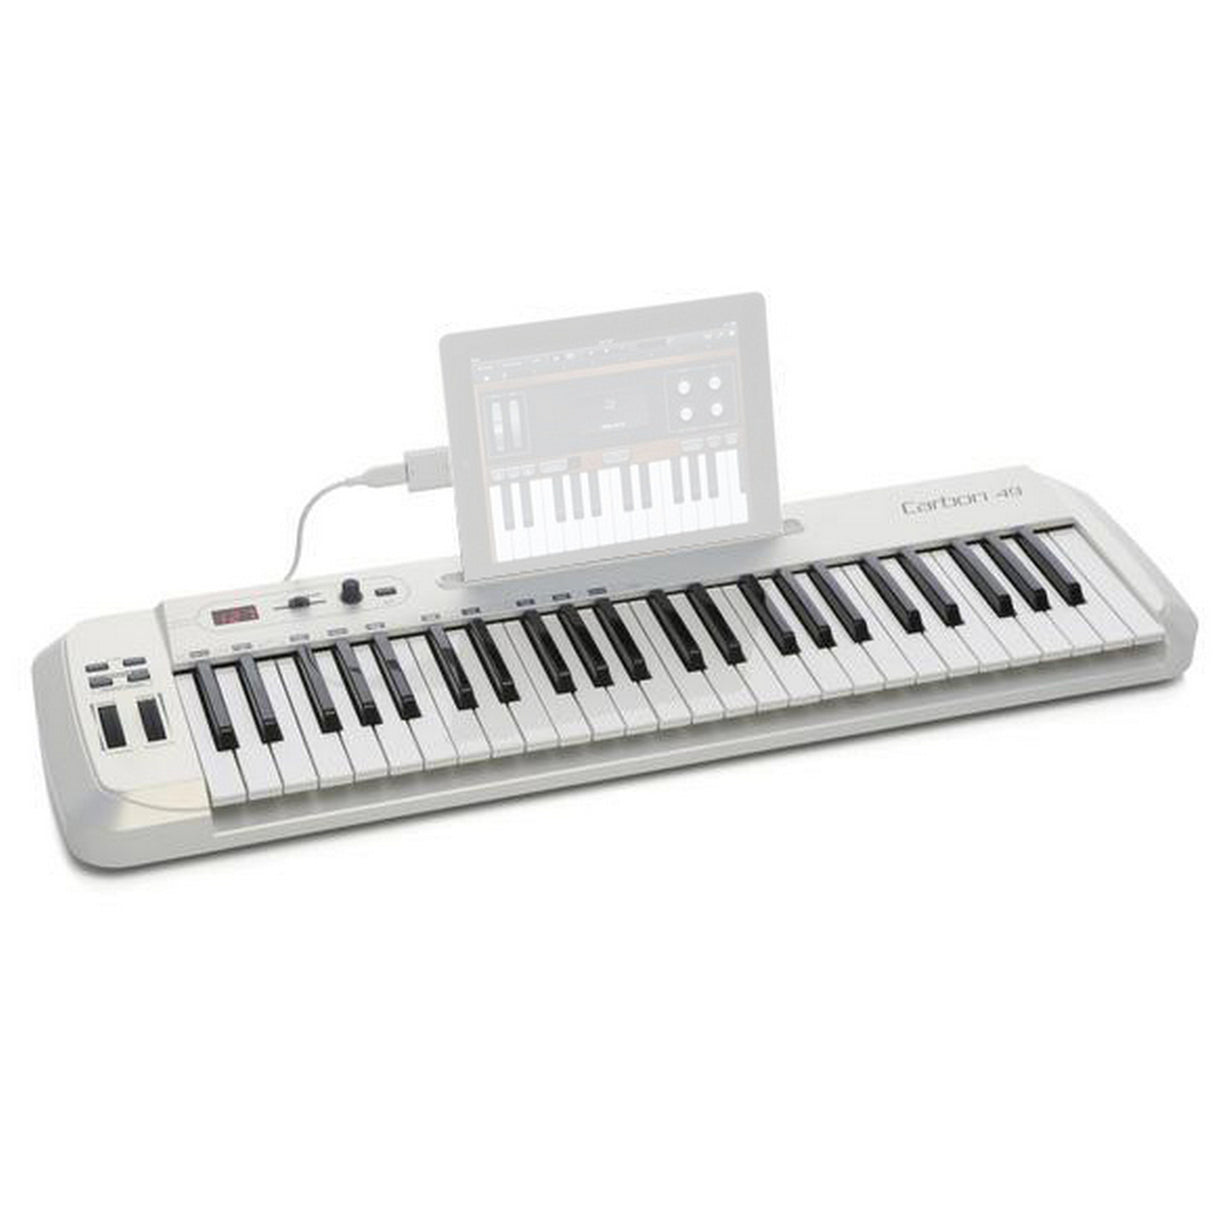 Samson Carbon 49 49 Keyboard USB MIDI Controller (Used)